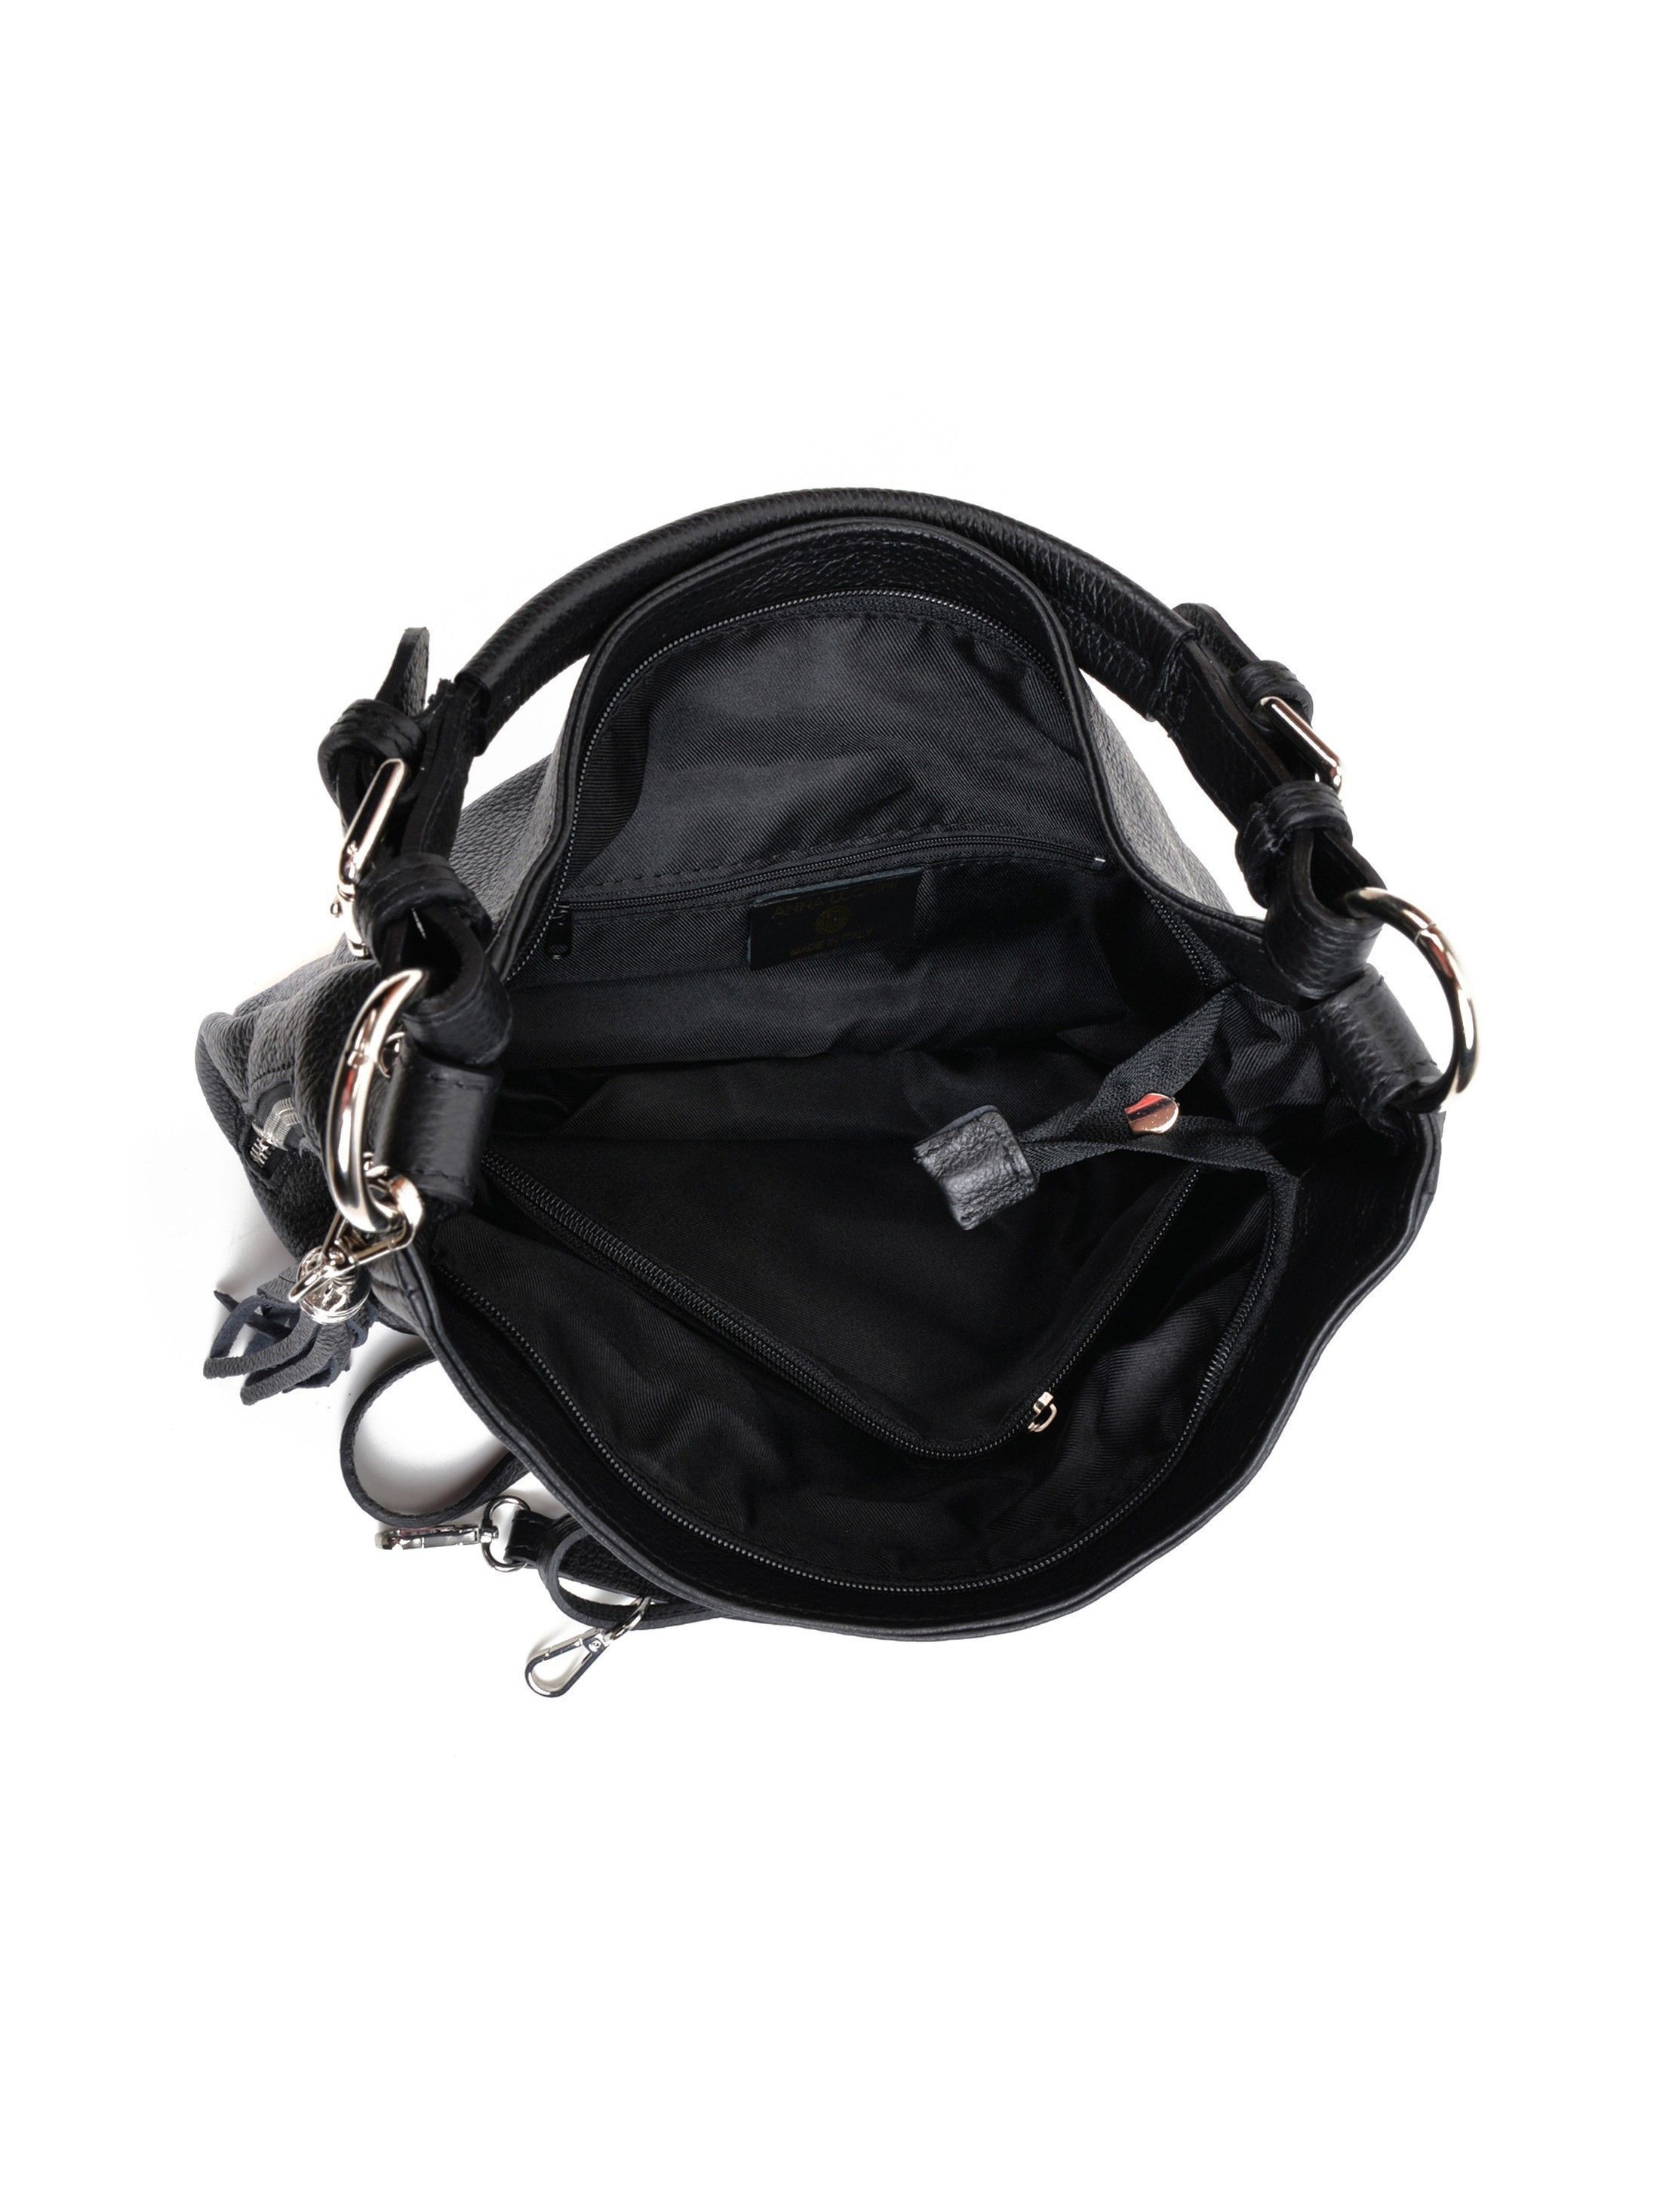 Handbag
100% cow leather
Top zip closure
Interior zip pocket
Side zip pocket
Back zip pocket
Tassel detail
Dimensions (L): 26x36x10 cm
Handle: 48 cm
Shoulder strap: 120 cm adjustable